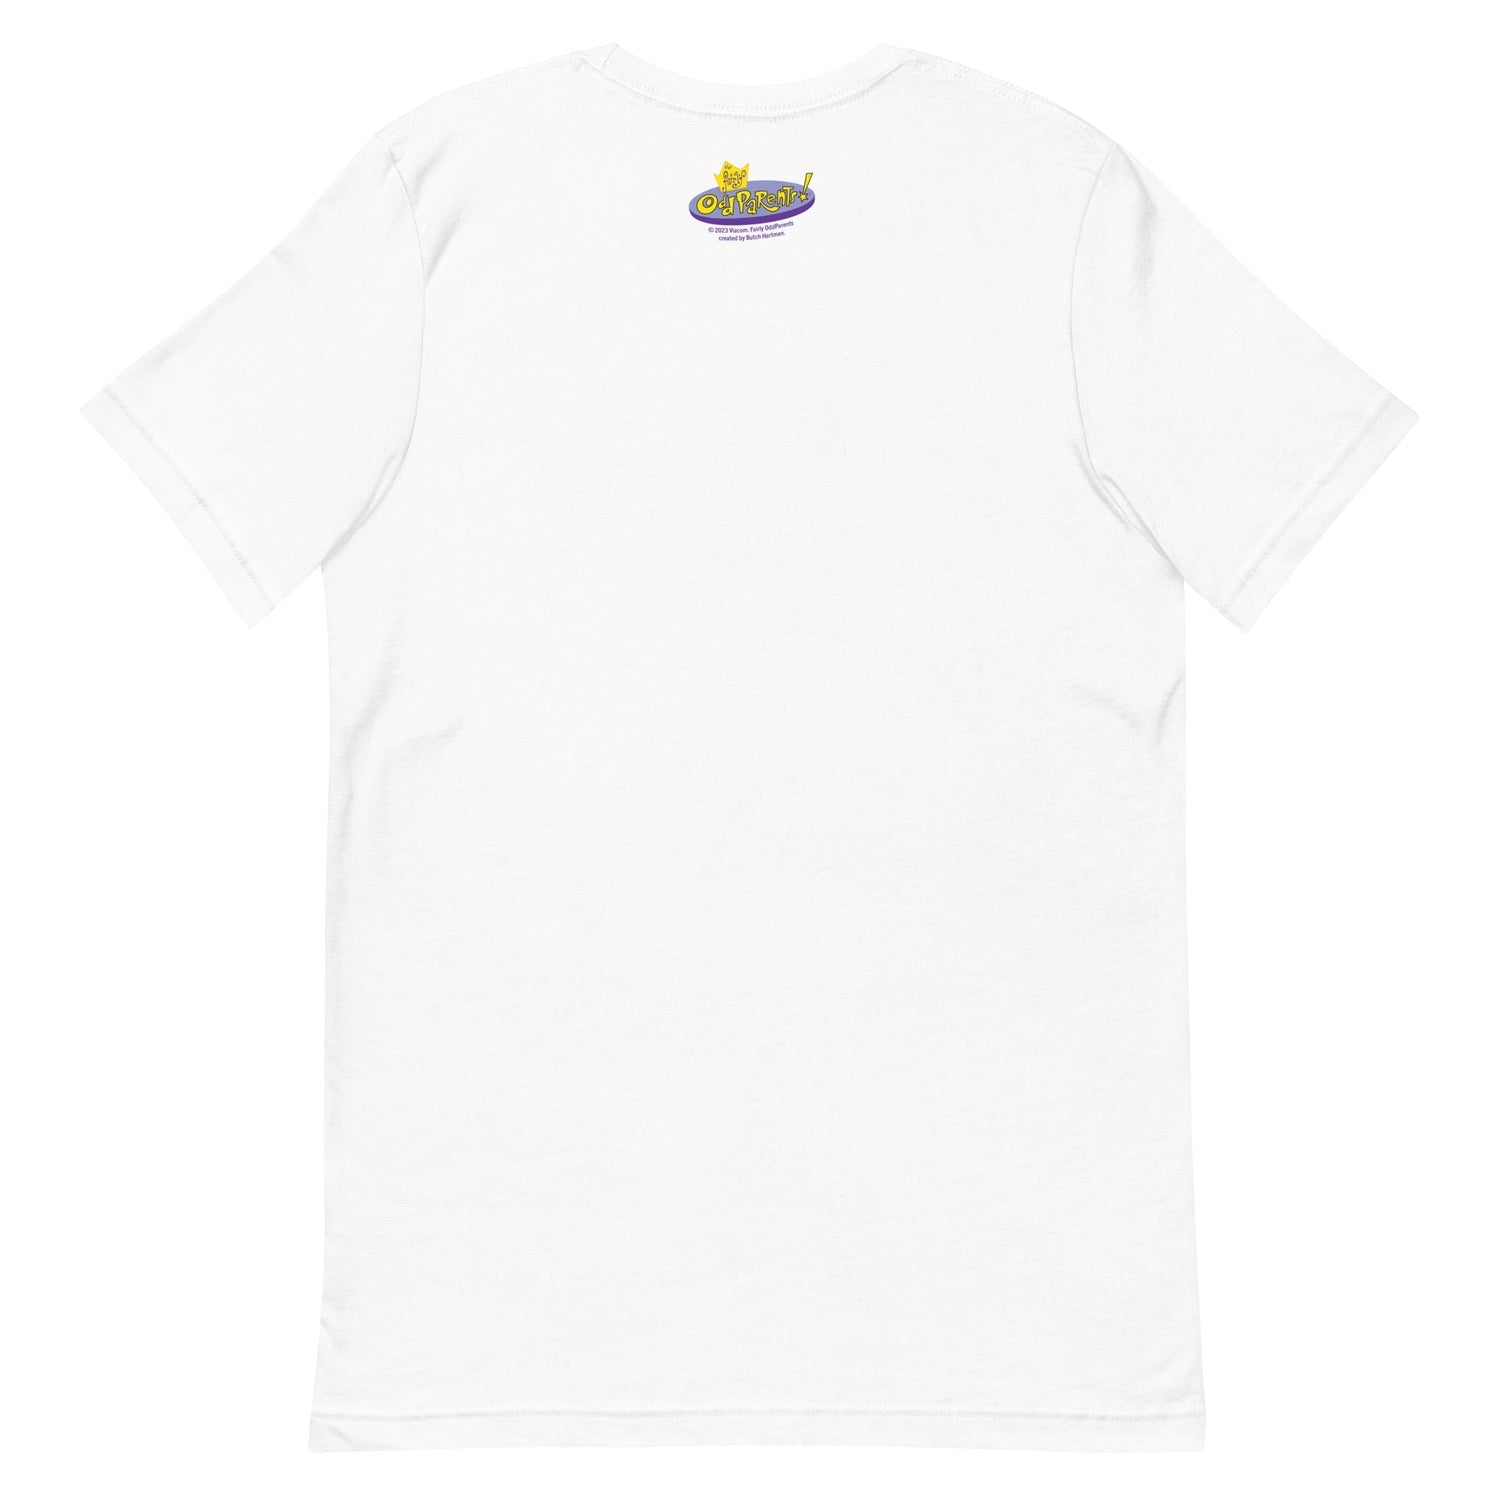 The Fairly OddParents Icky Vicky Unisex Adult Short Sleeve T - Shirt - Paramount Shop